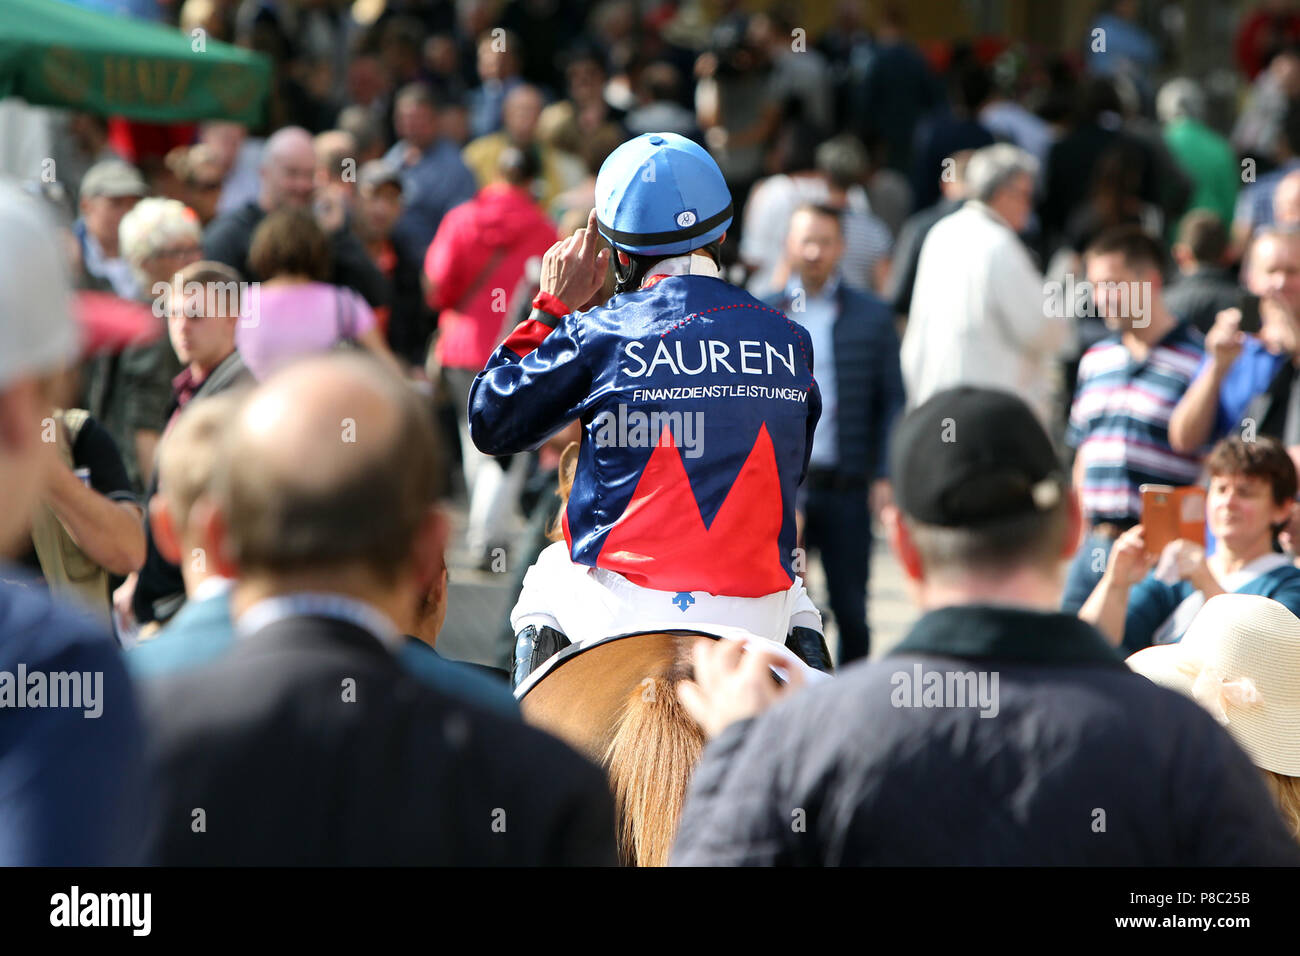 Iffezheim, abito racing del proprietario Eckhard Sauren Foto Stock